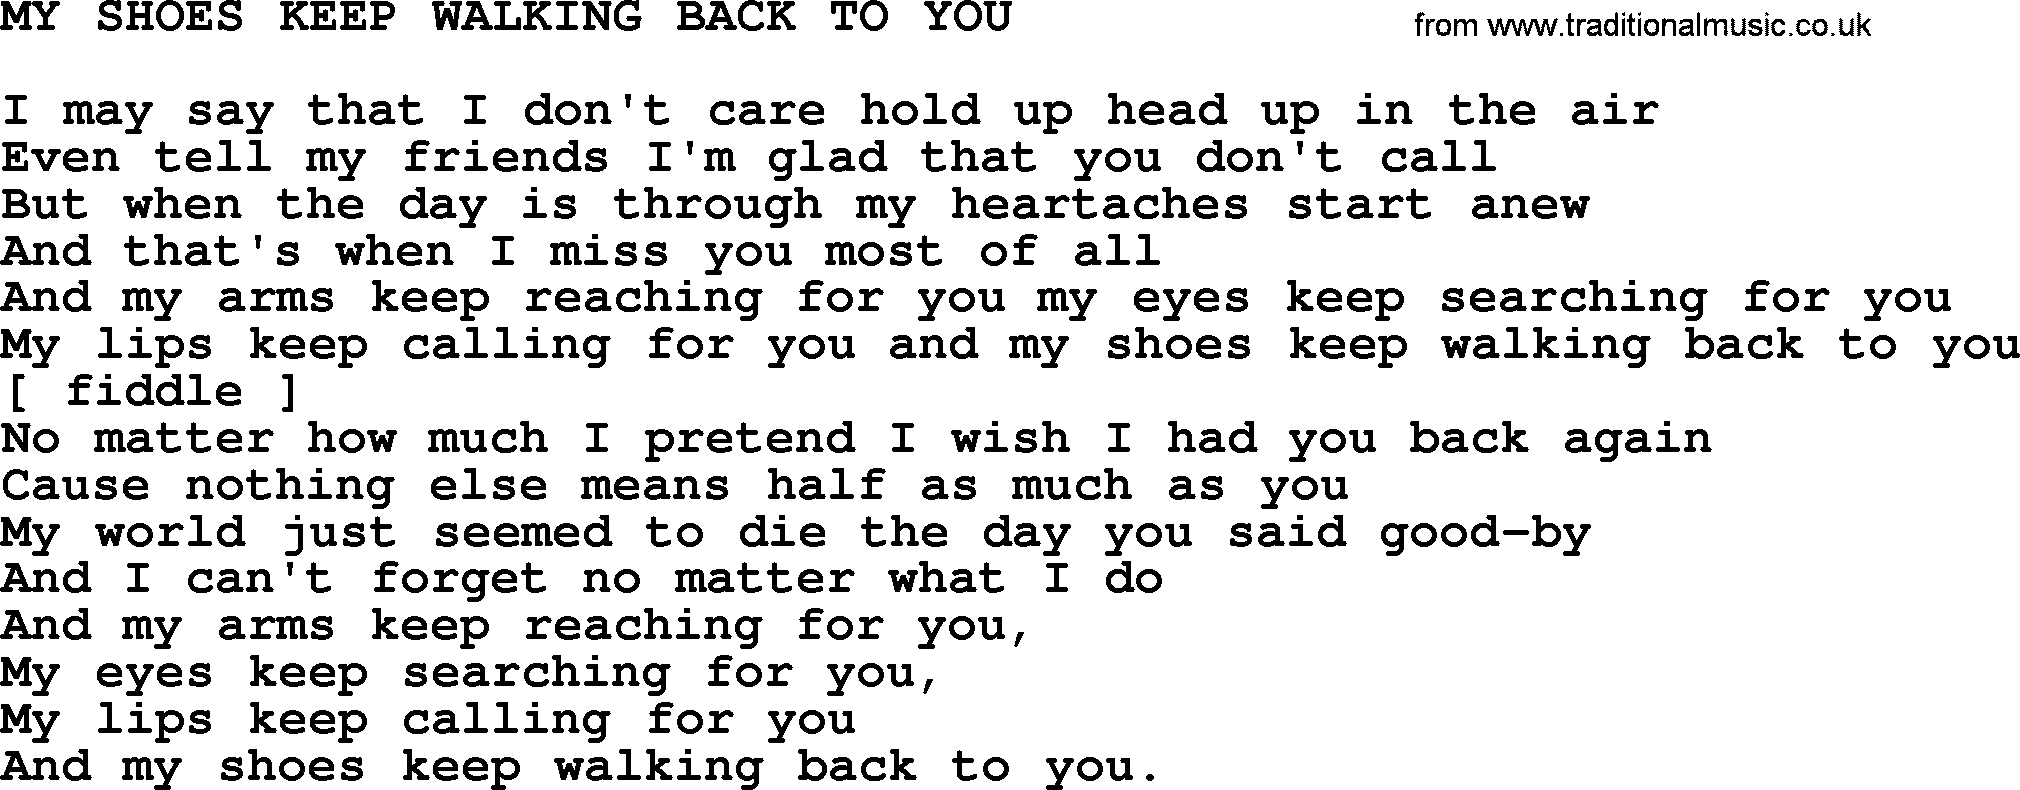 Johnny Cash song My Shoes Keep Walking Back To You.txt lyrics